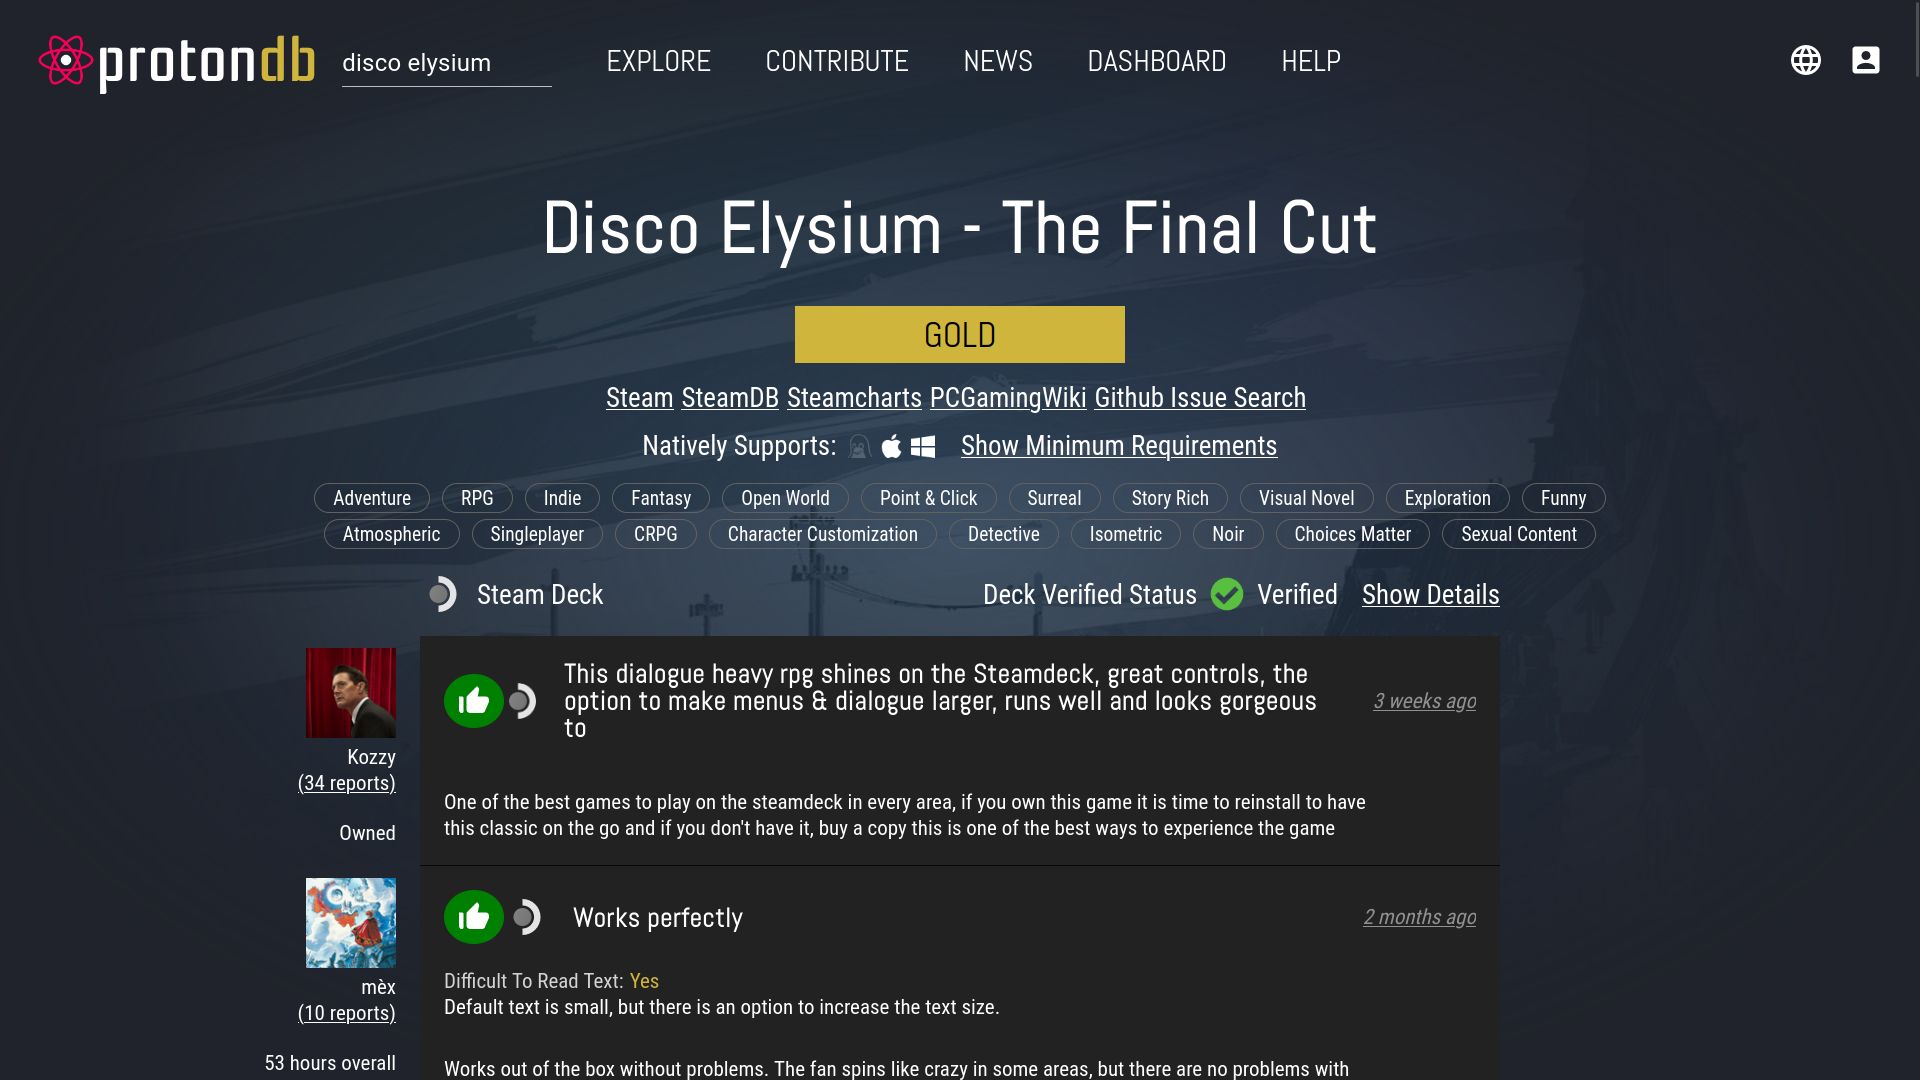 Disco Elysium page of the ProtonDB website